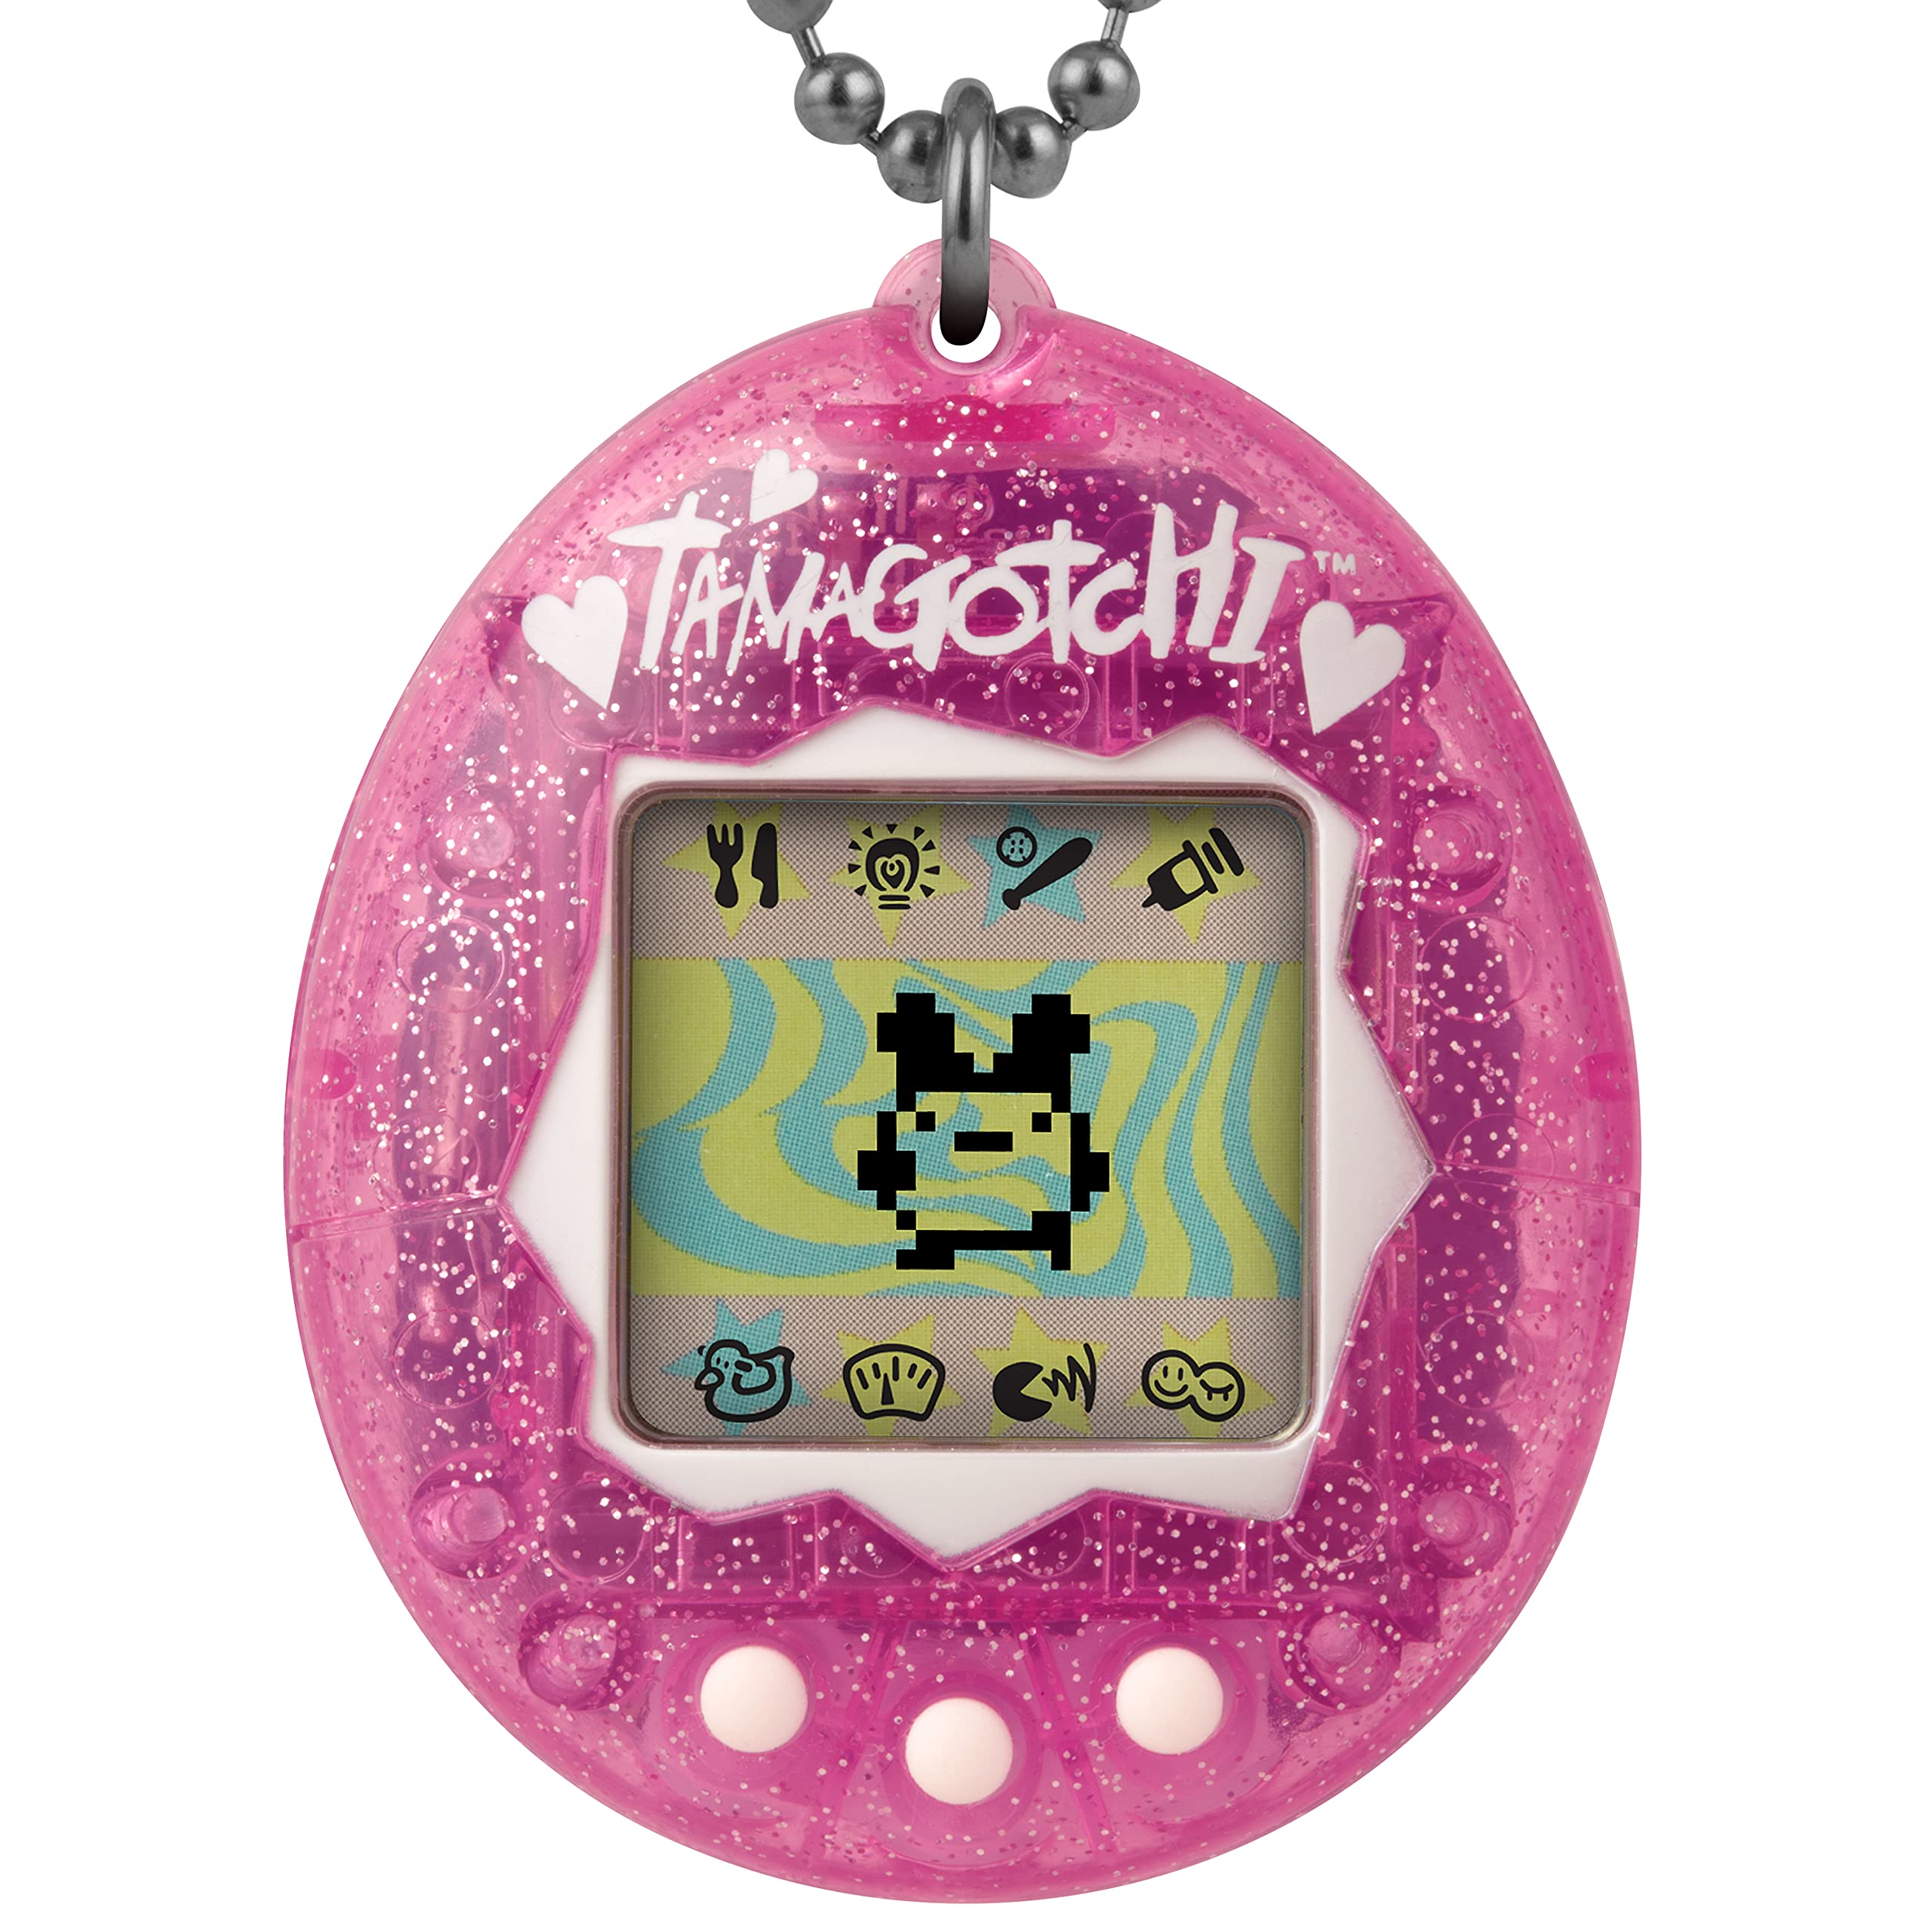 Tamagotchi Original - Pink Glitter, 42882